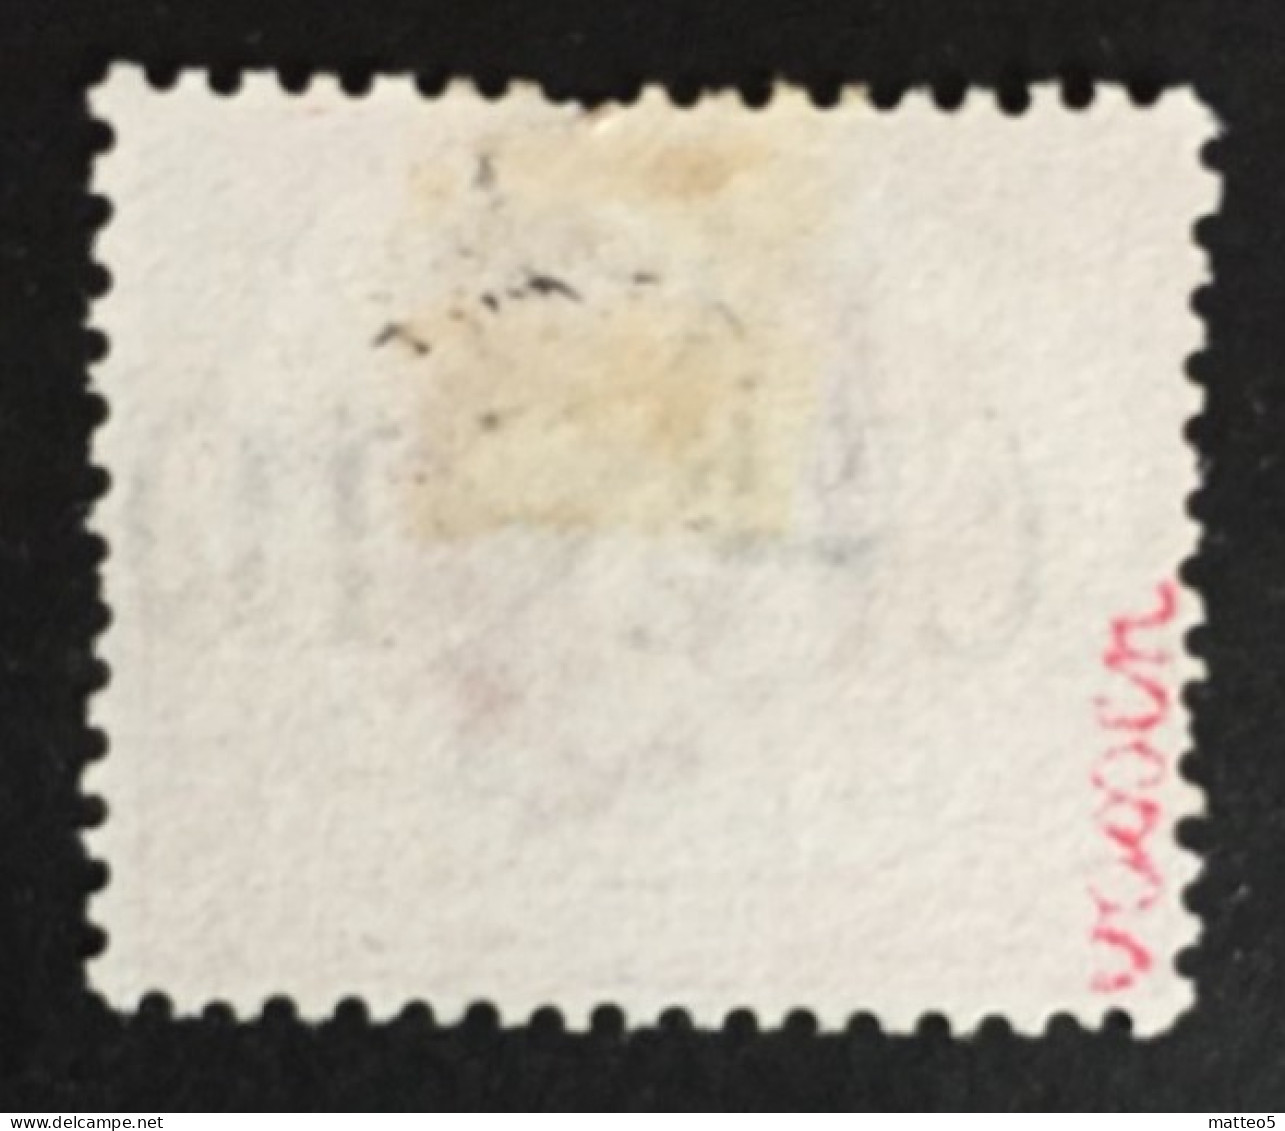 1882 - San Marino - Soprastampa Cent 10 Su Cent 20 - Stemma Used - Used Stamps